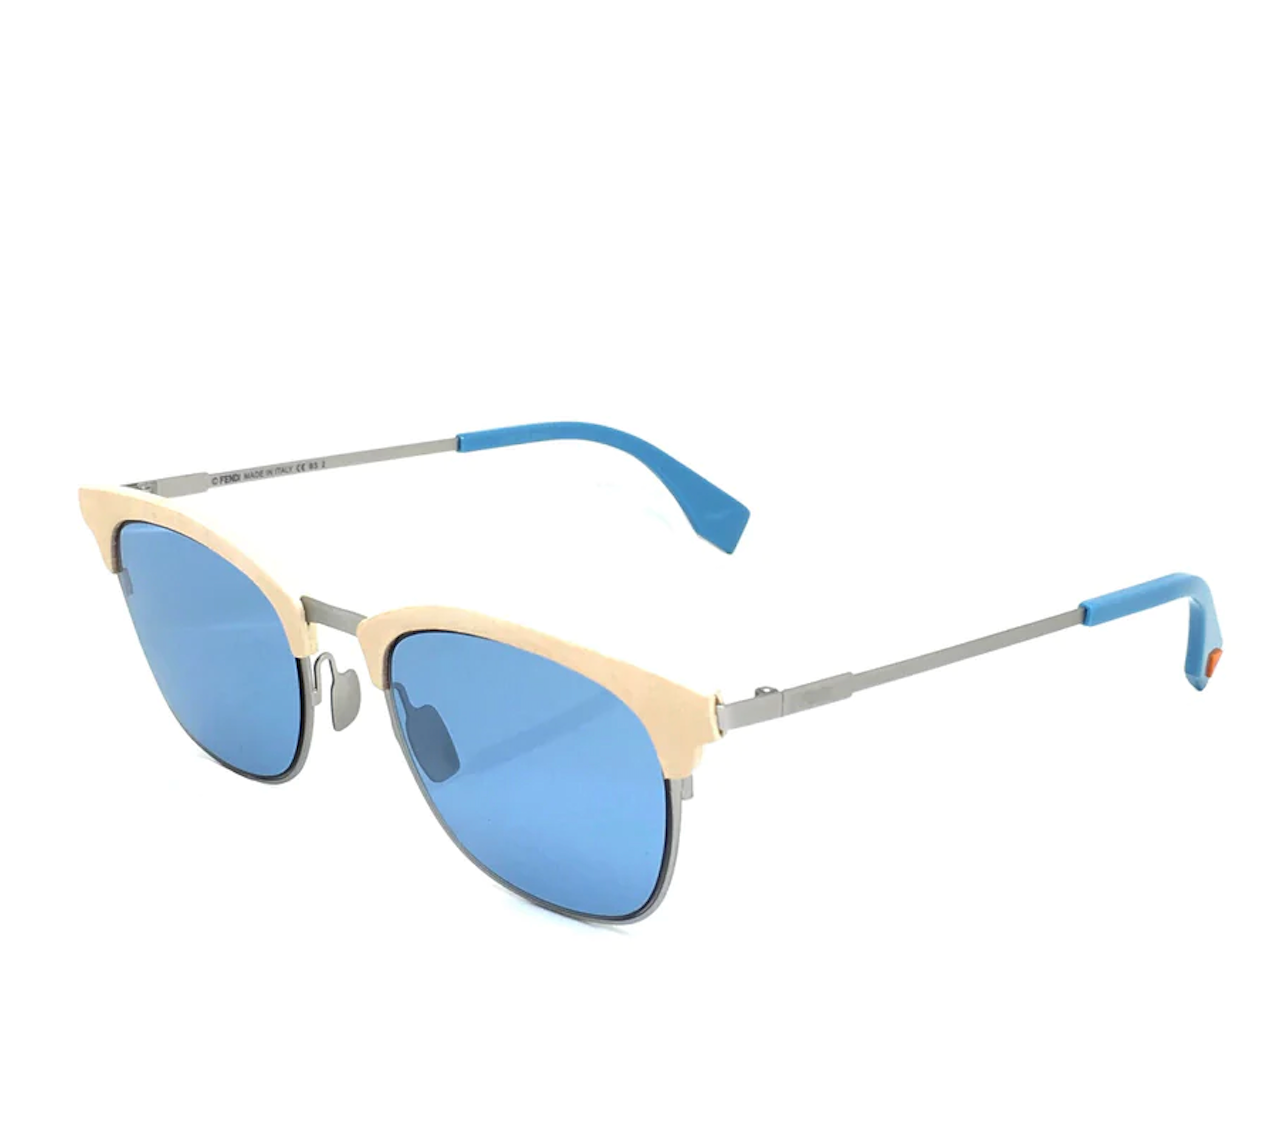 Fendi FF0228-S-SCBKU 45mm New Sunglasses